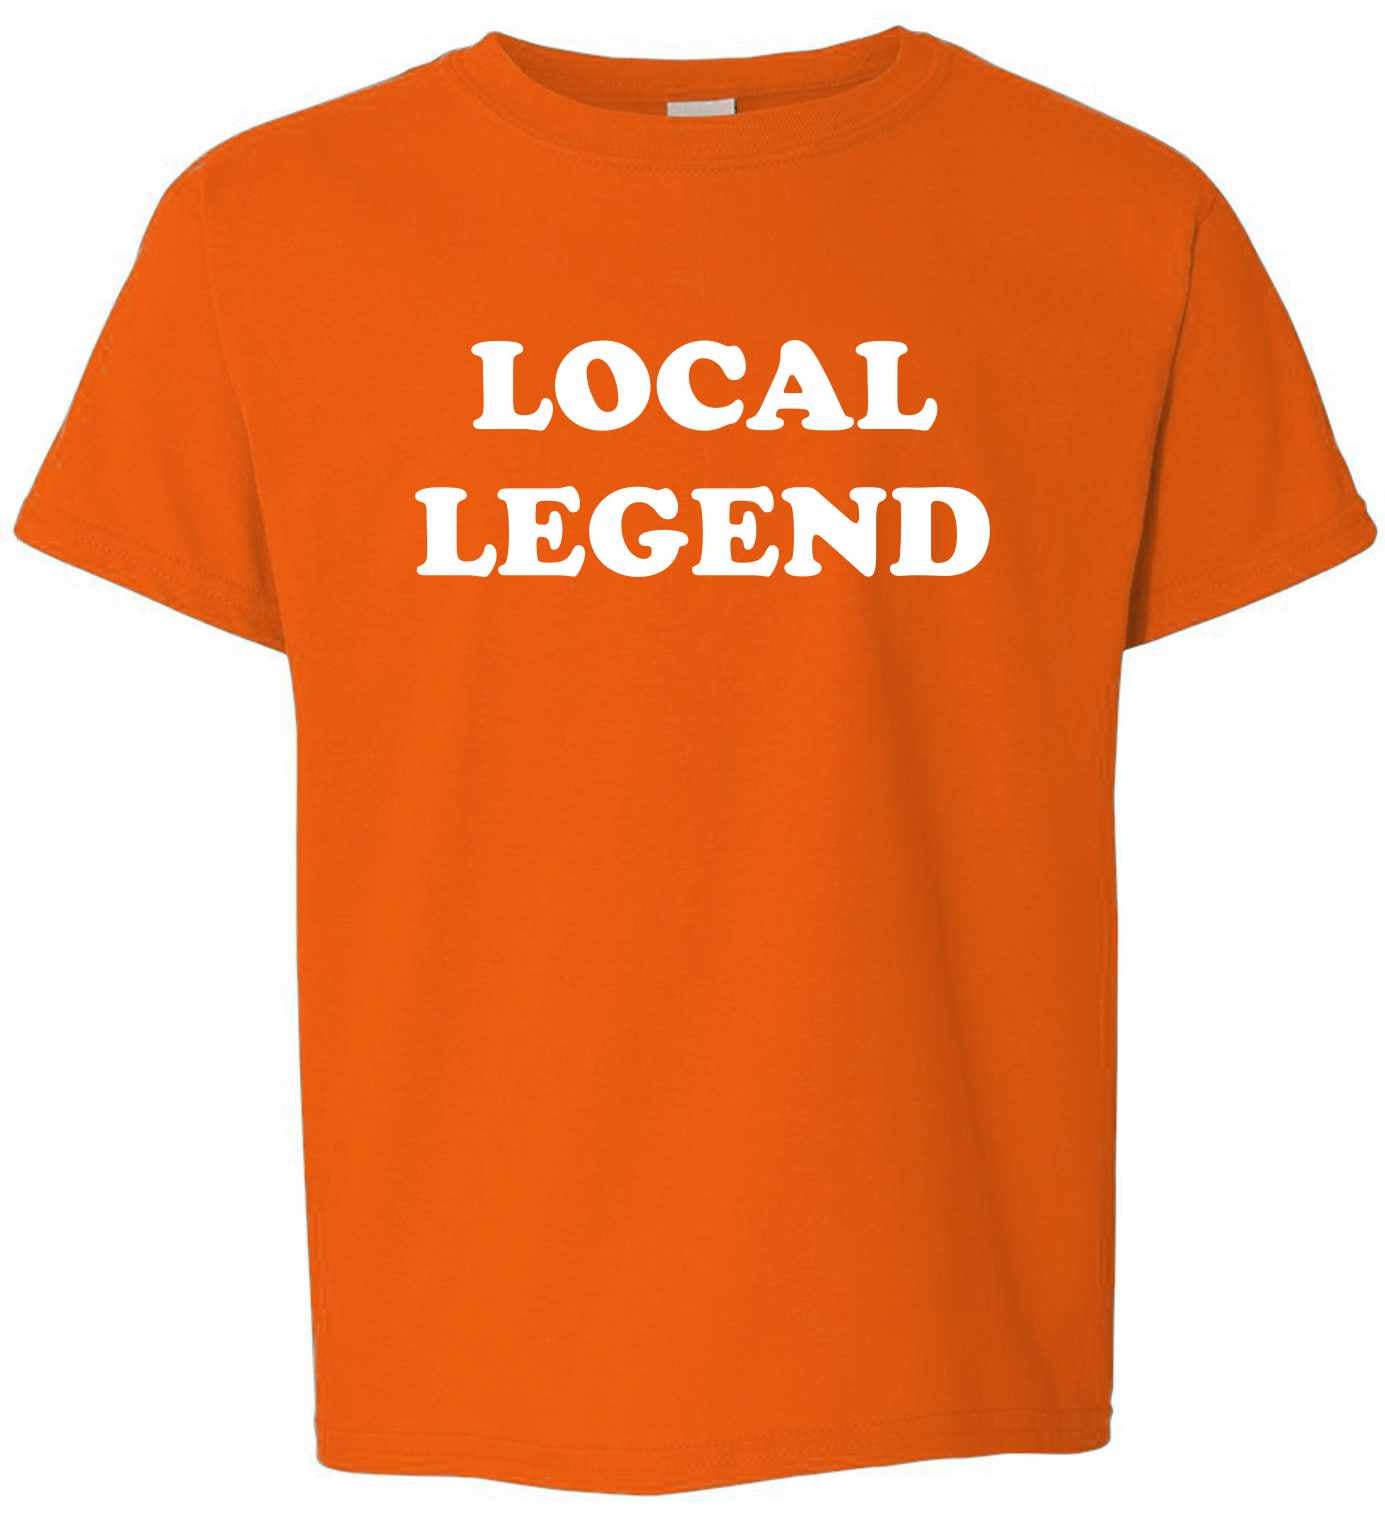 Local Legend on Kids T-Shirt